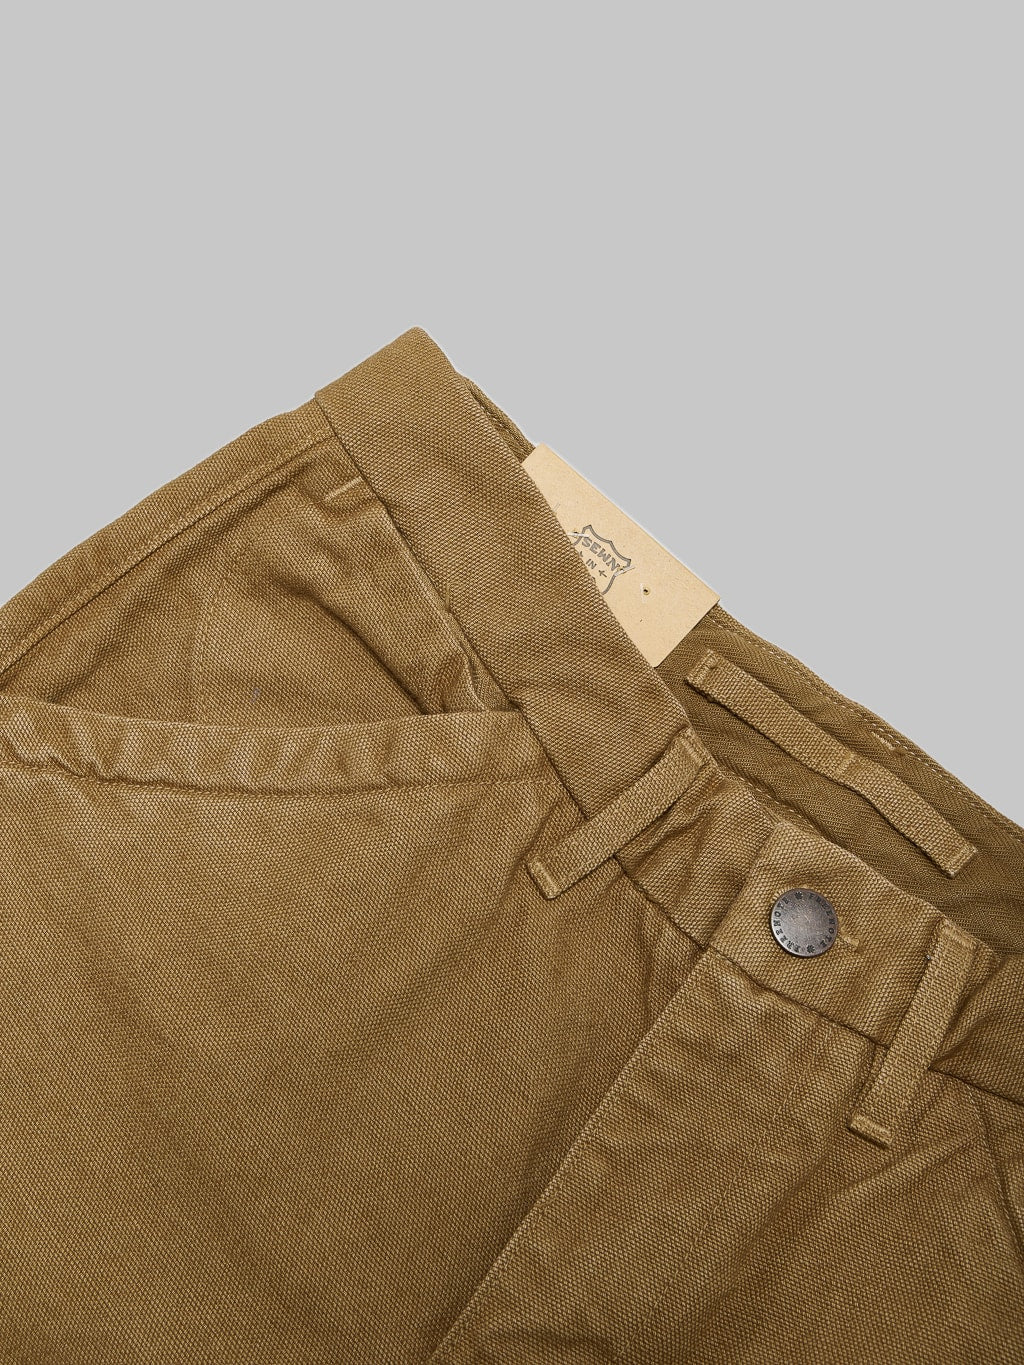 freenote cloth workers chino slim fit slub tan front pocket